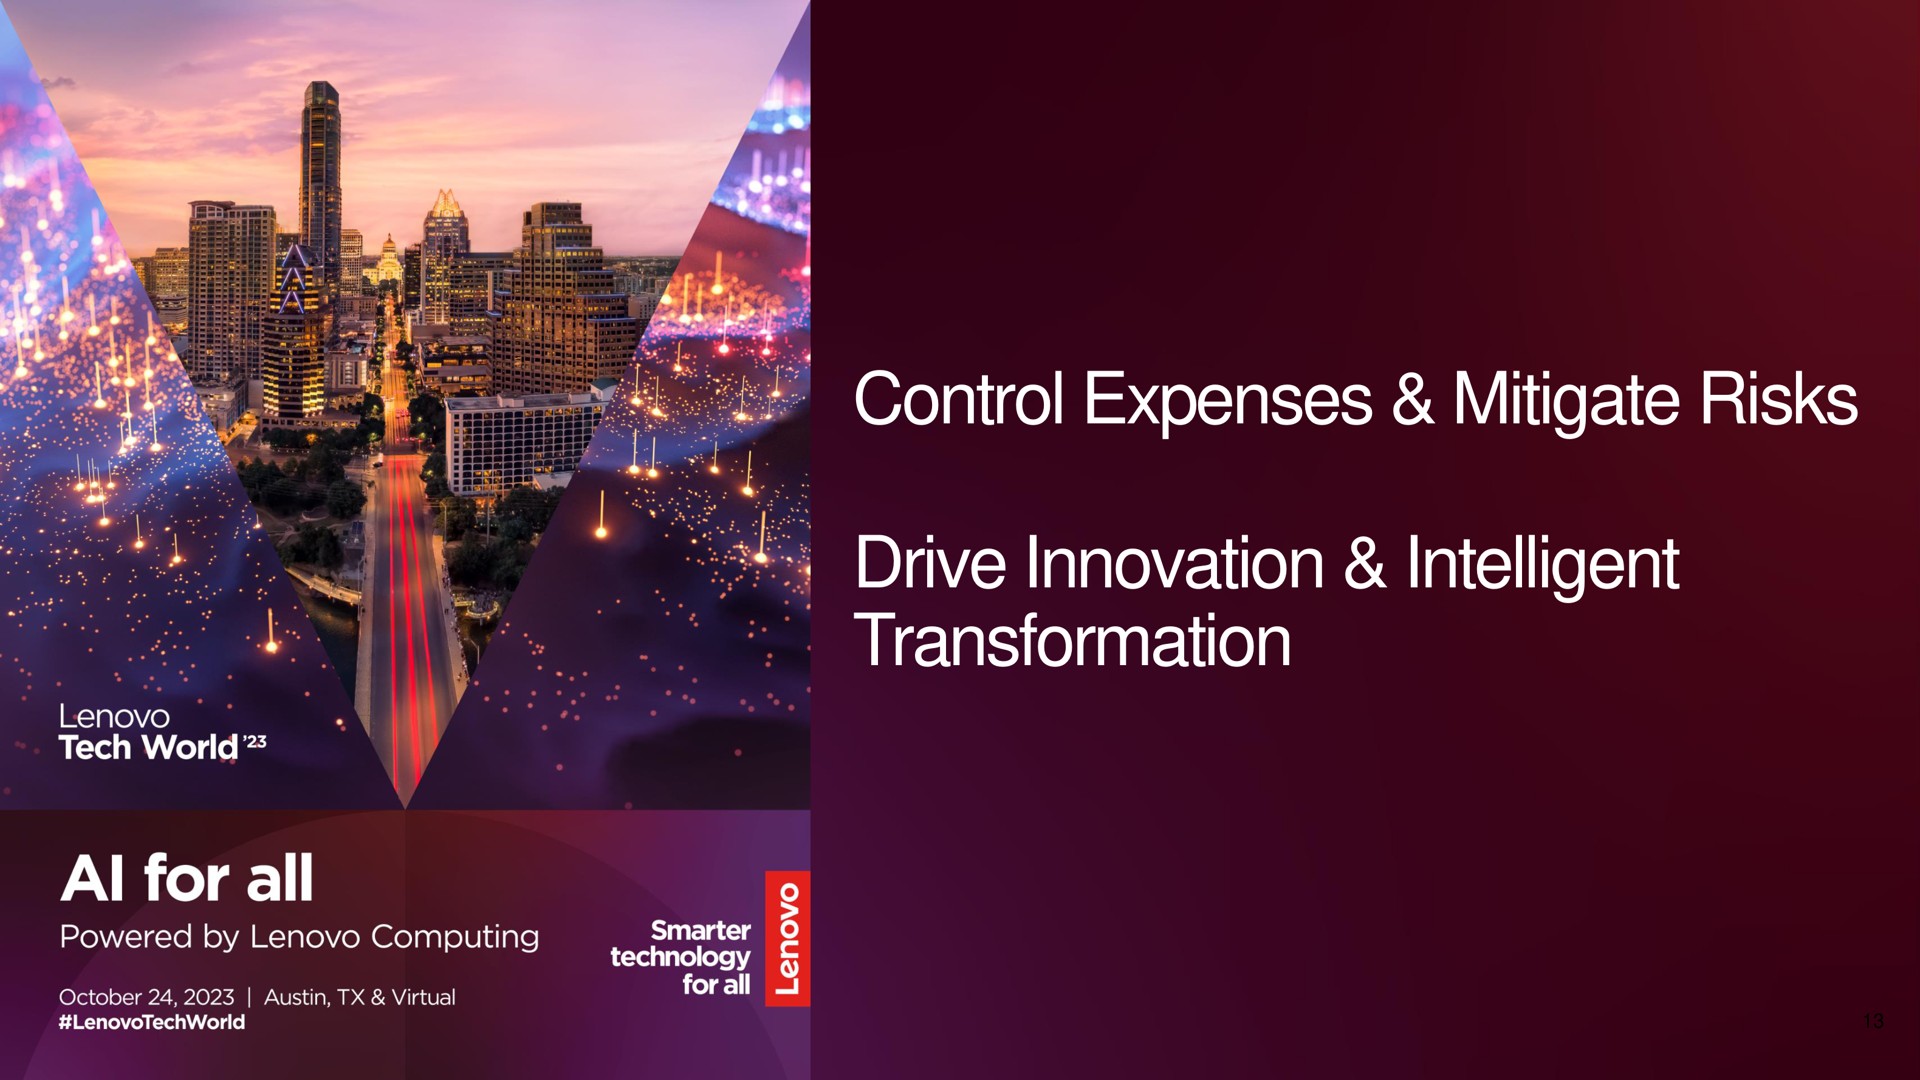 control expenses mitigate risks drive innovation intelligent transformation for all | Lenovo